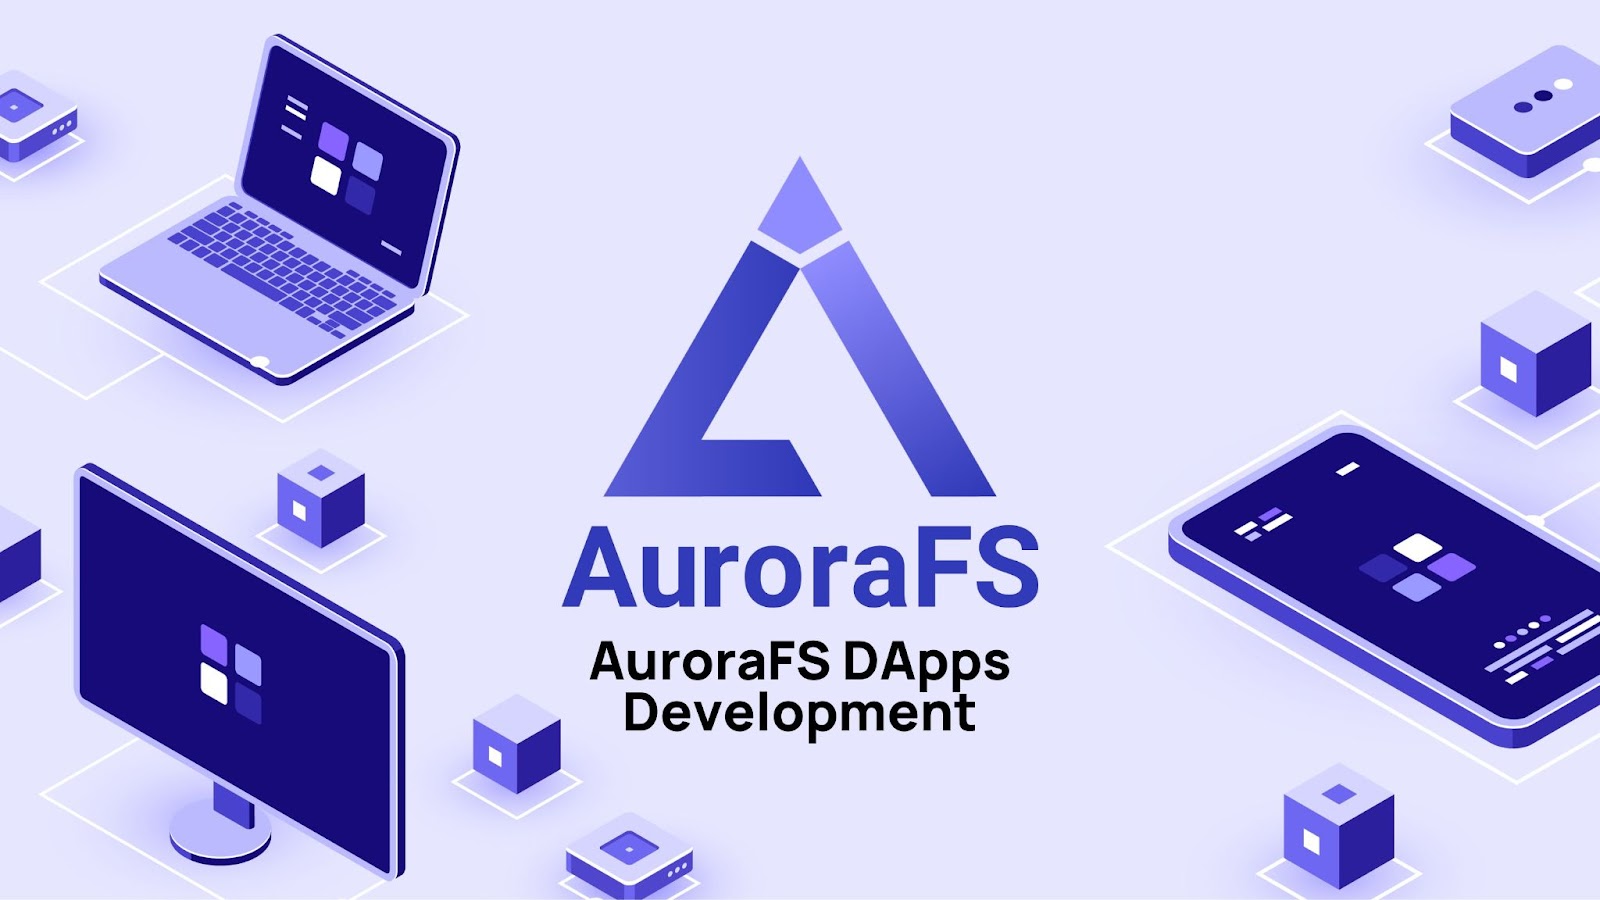 aurorafs-dapps-development-capabilities-to-be-enhanced